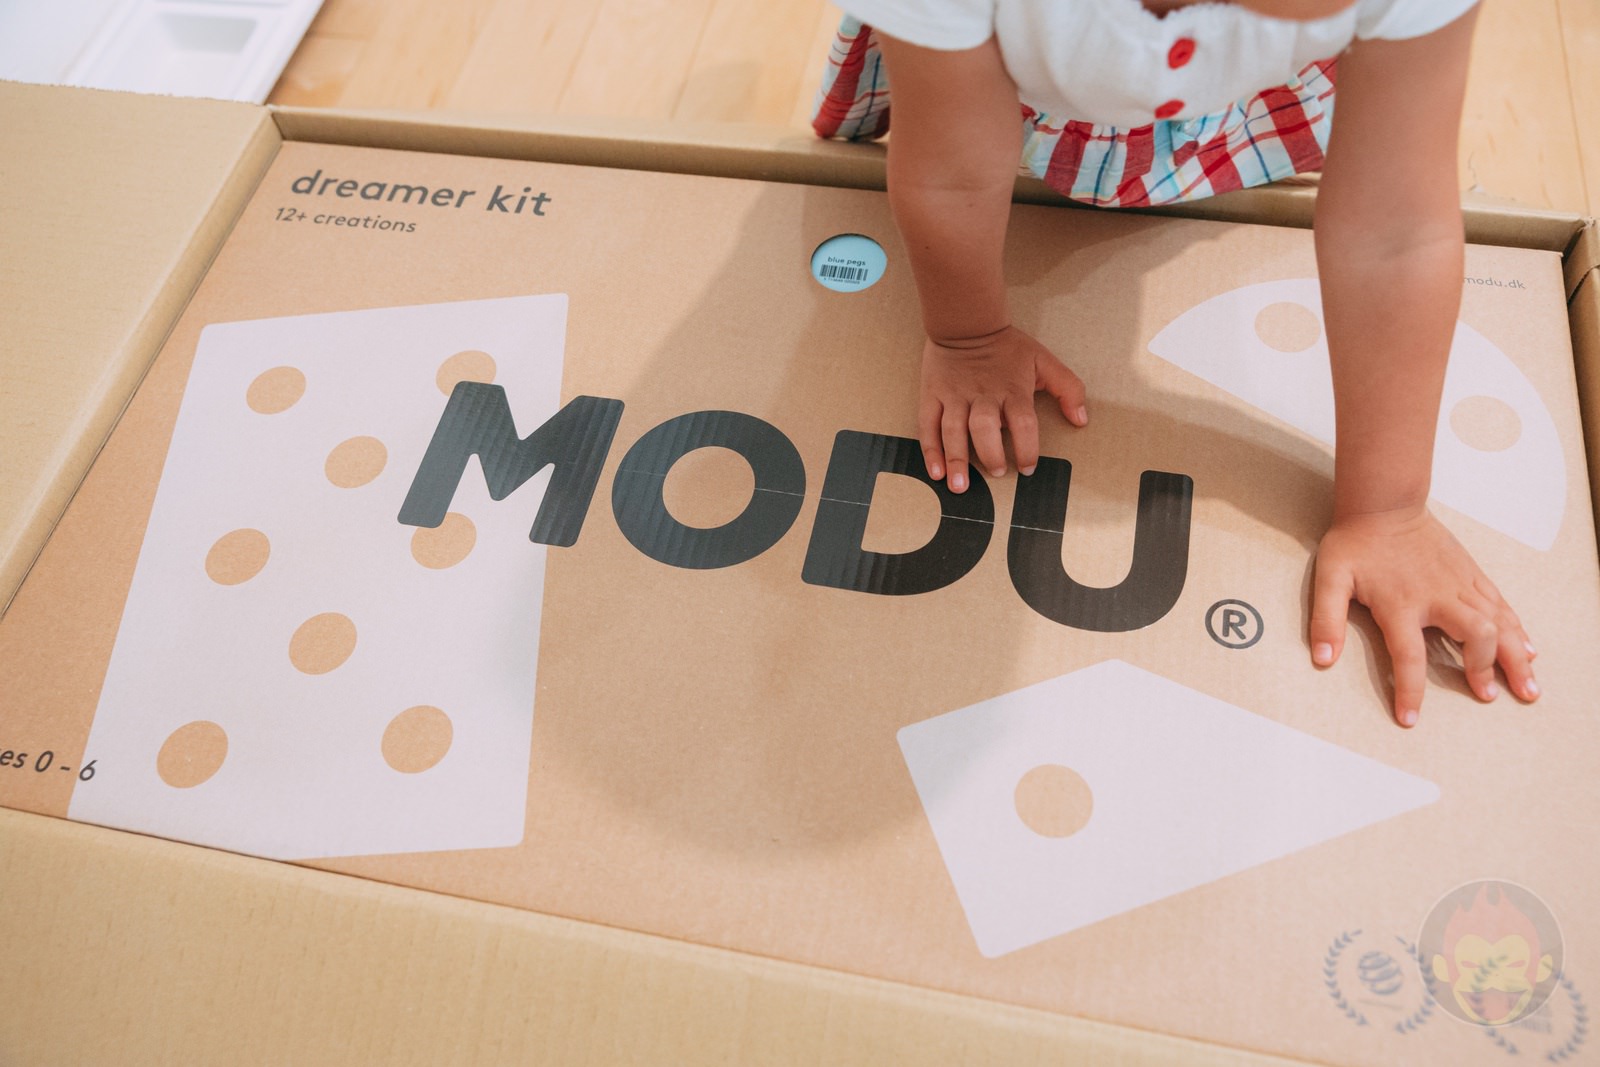 MODU Dreamer Kit Review Hands On 01